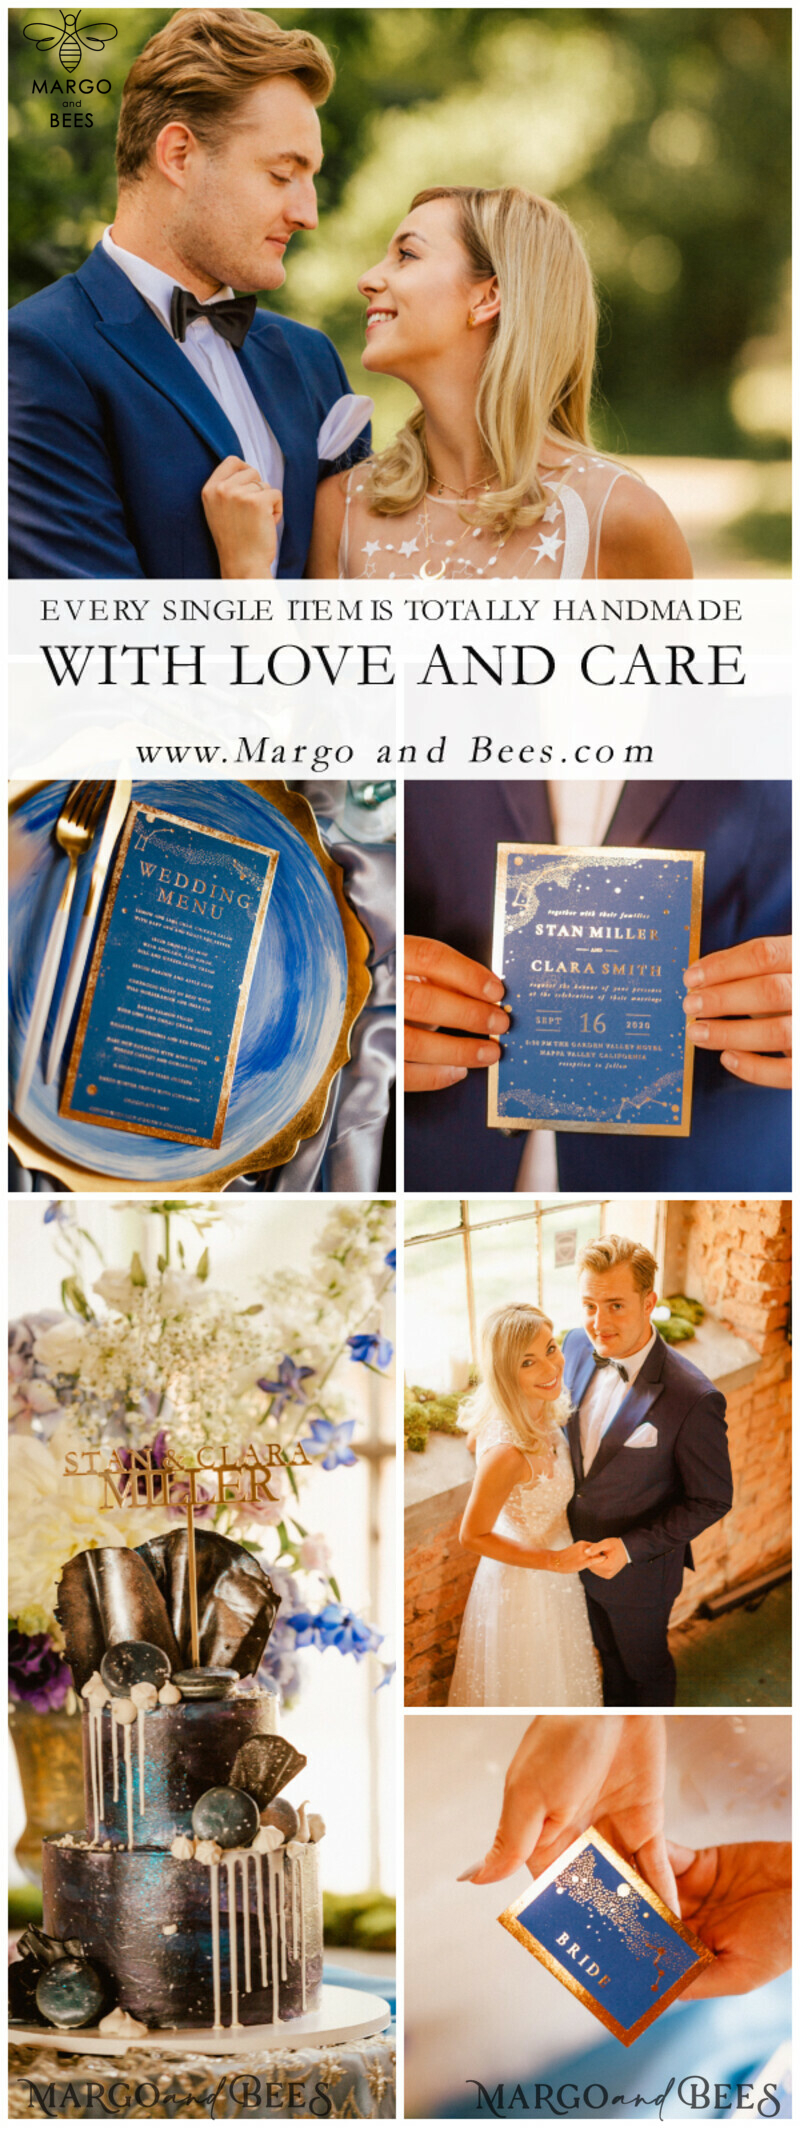 Luxury Golden Shine Wedding Invitations: Royal Navy Blue Wedding Invites with Glamour Gold Foil - Elegant and Bespoke Galaxy Wedding Invitation Suite-10